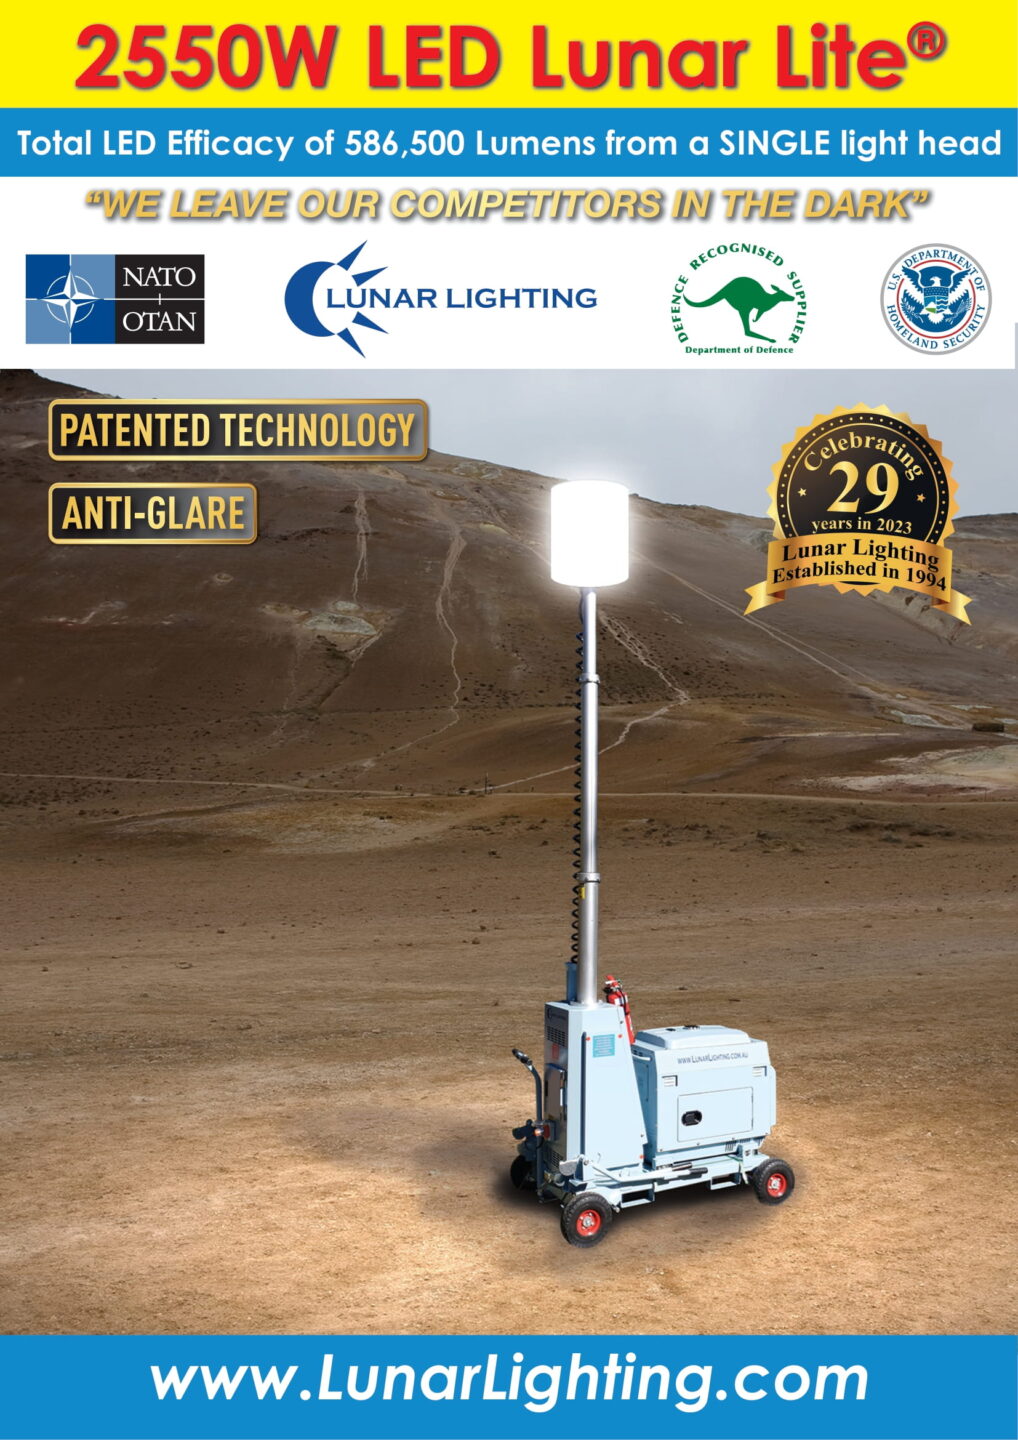 2550W-LED-Lunar-Lighting-Tower-Trolley-mounted-AUS (1)-1